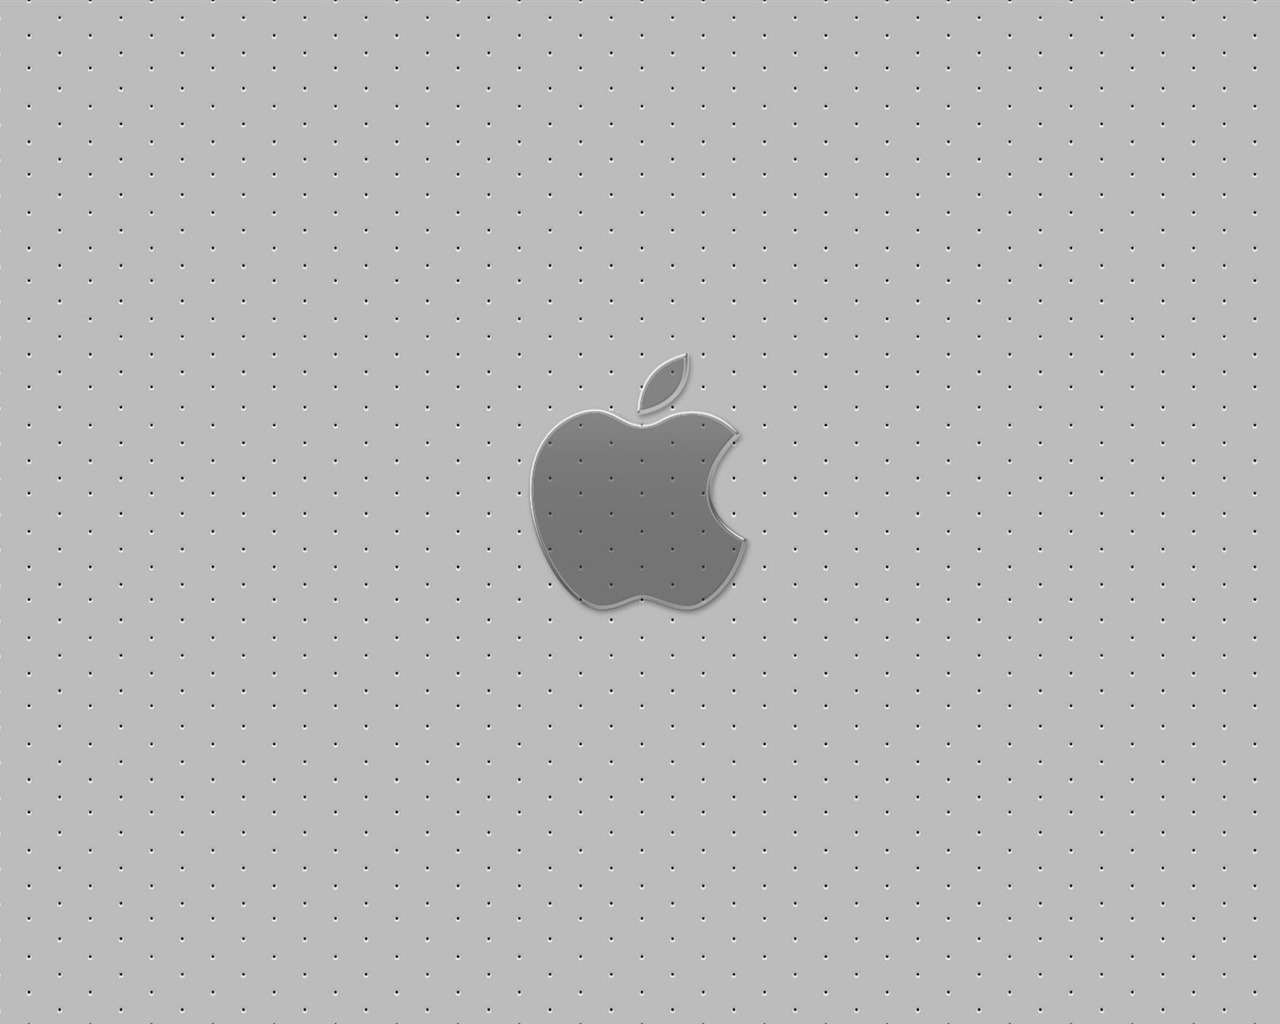 Apple theme wallpaper album (19) #20 - 1280x1024